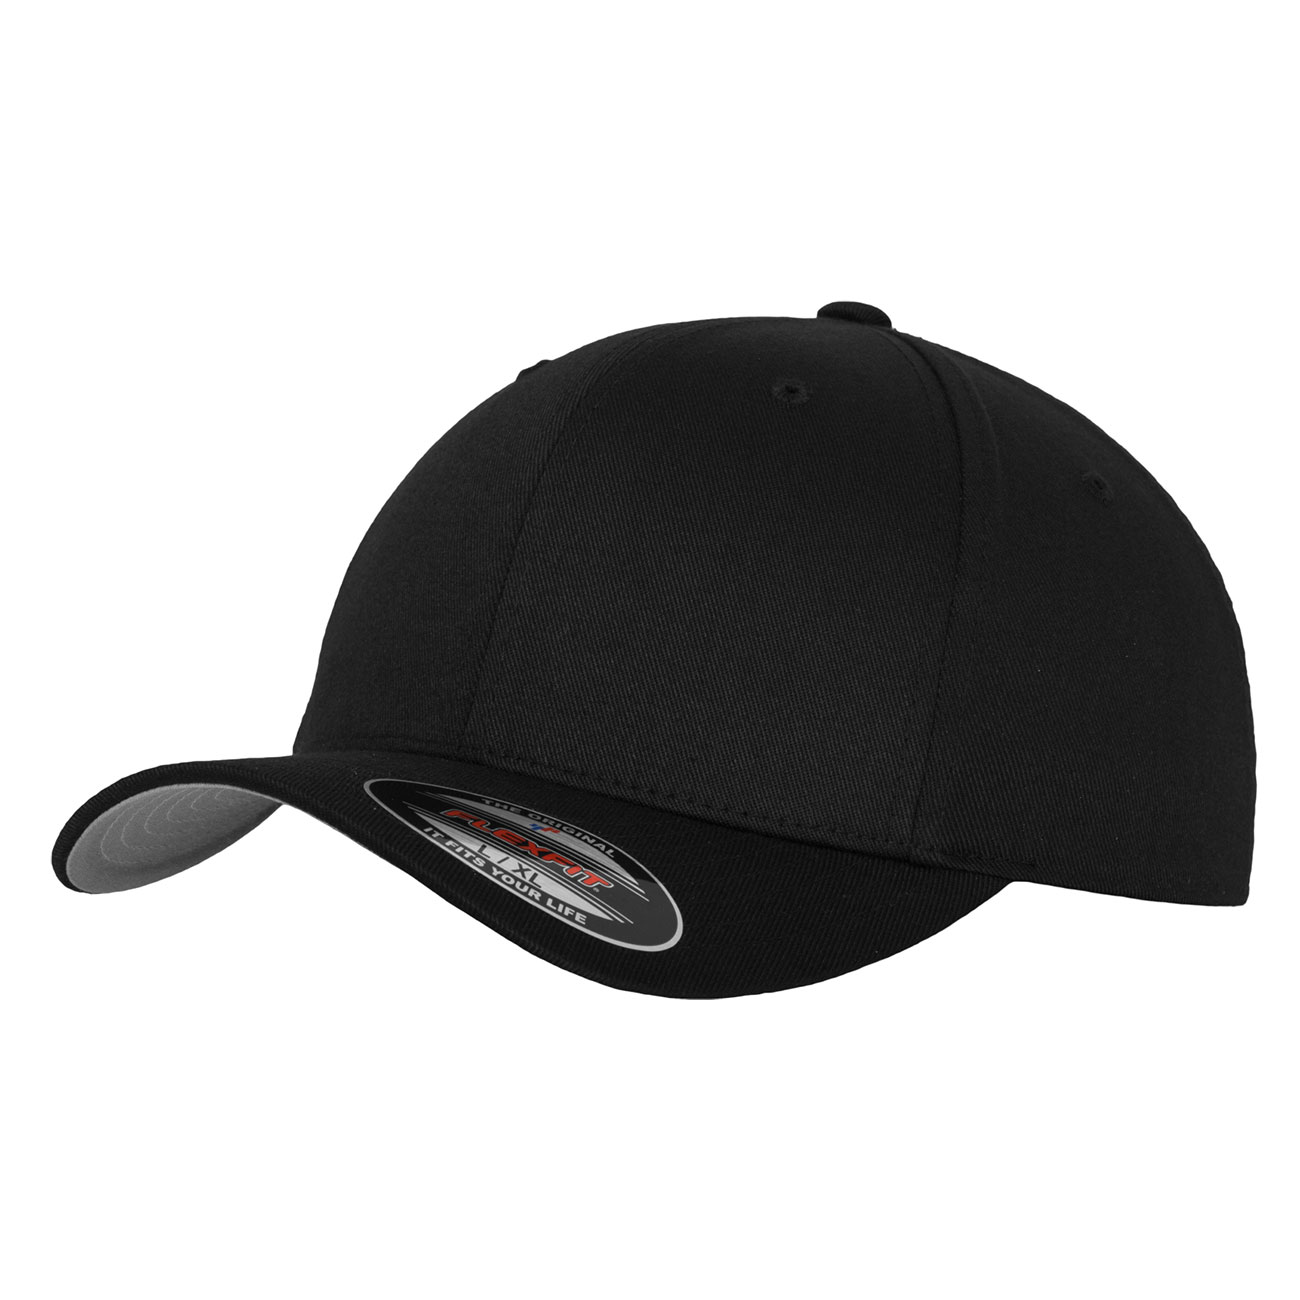 Flexfit Mütze Wooly Combed Cap schwarz-grau